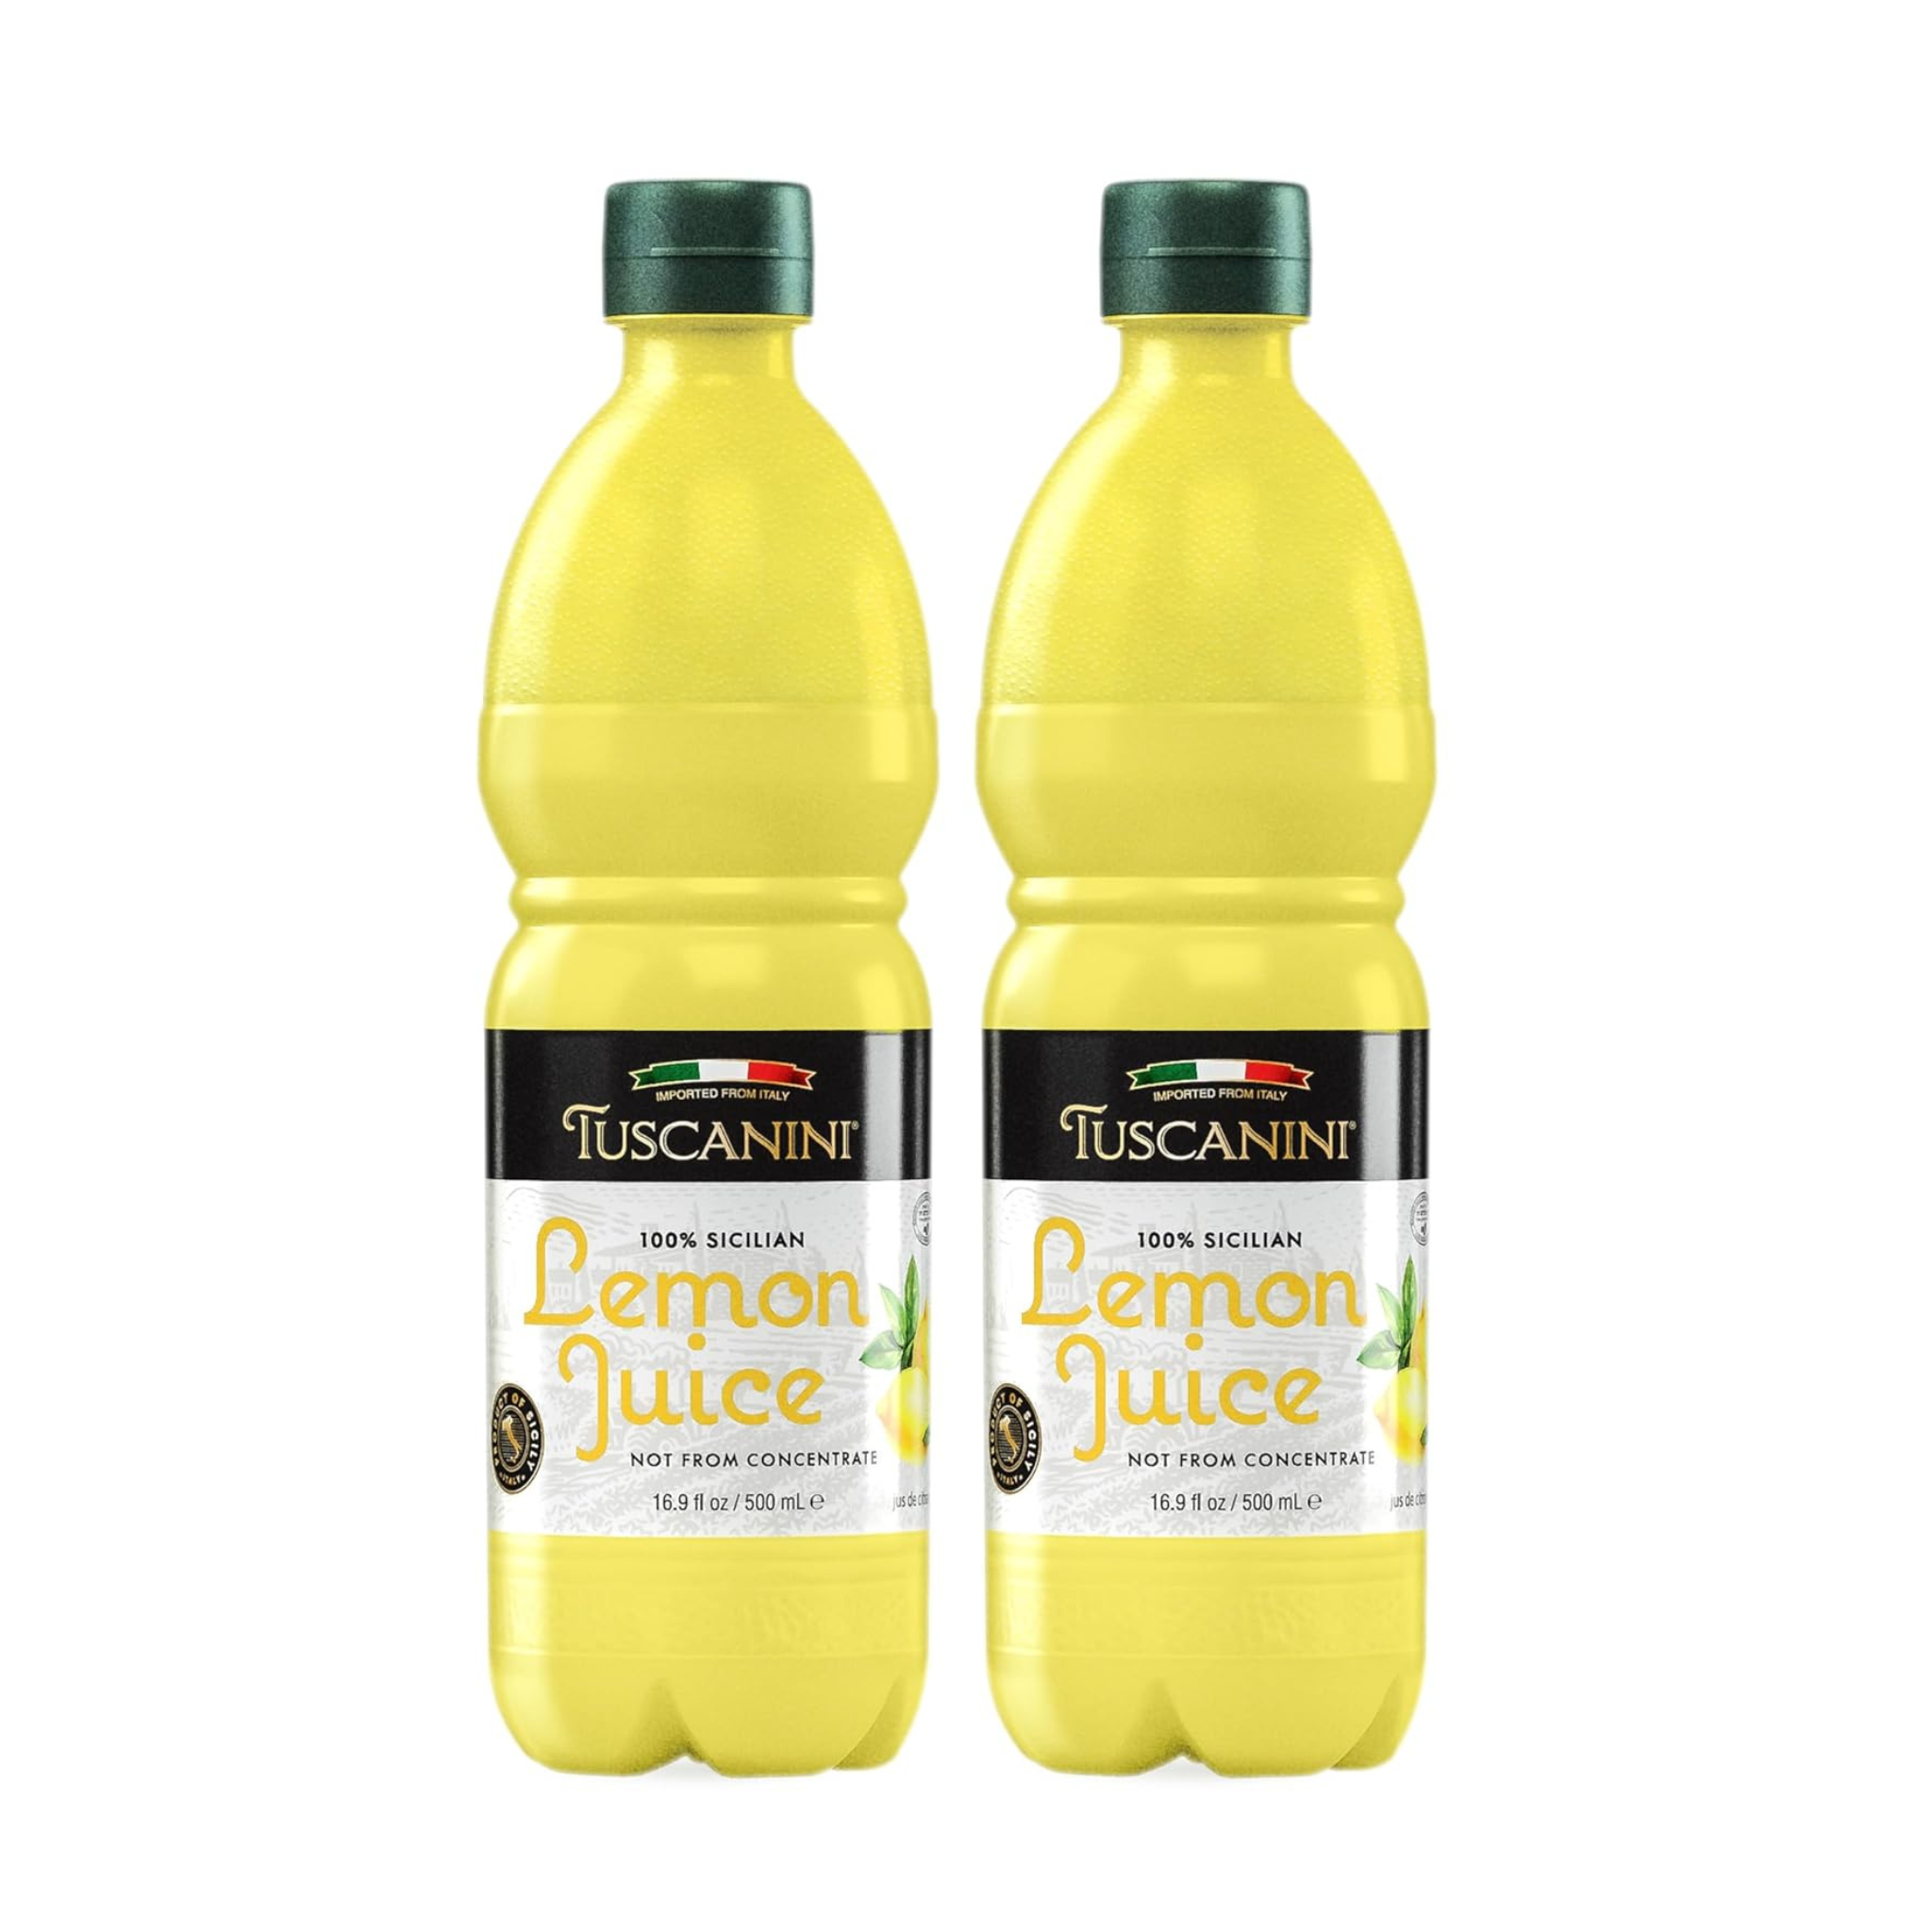 Tuscanini 100% Sicilian Lemon Juice, 2 Pack